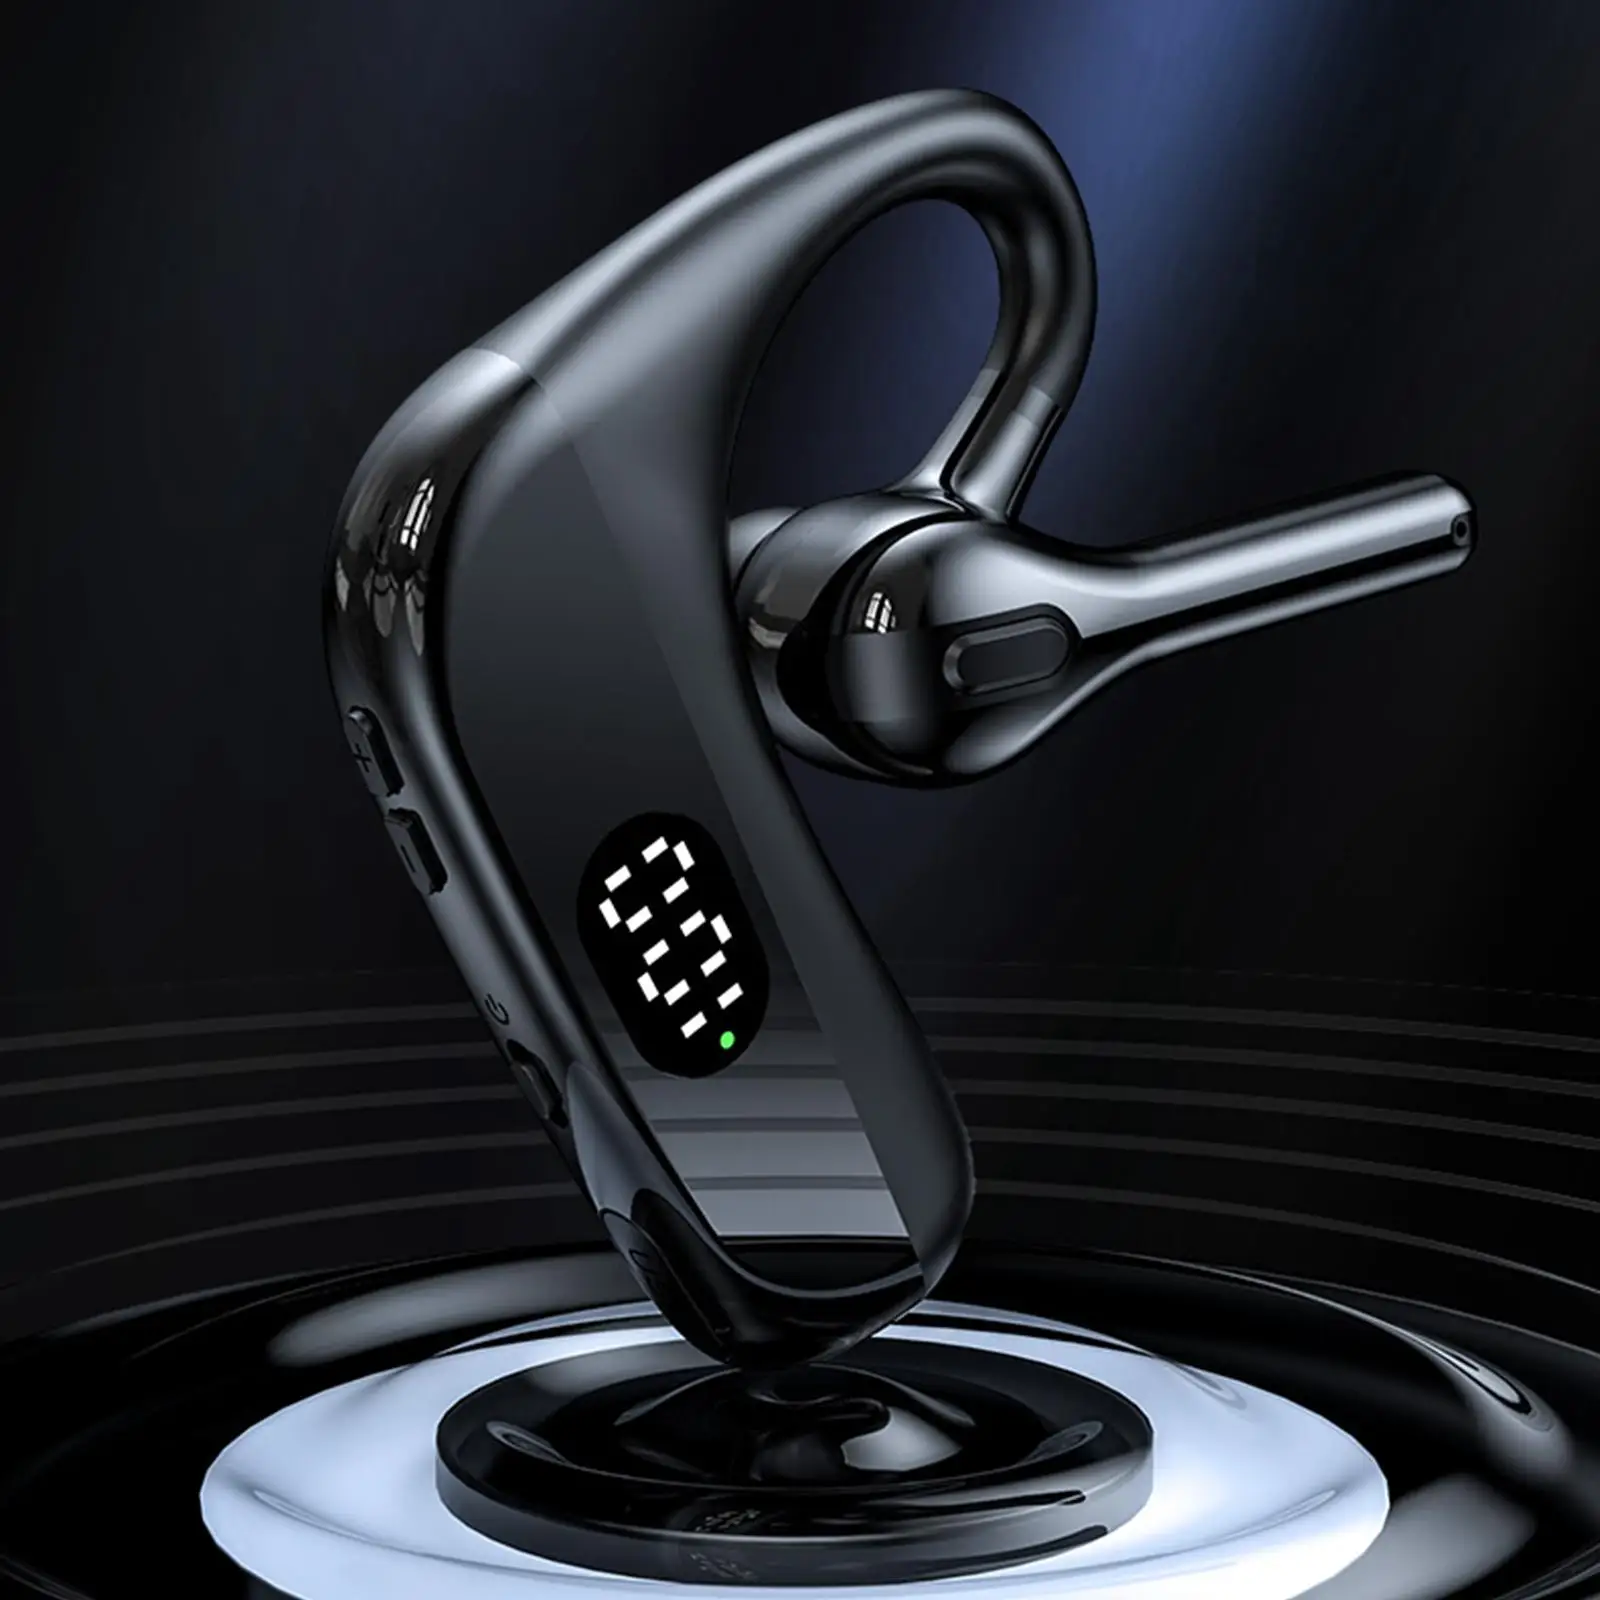 Waterproof Bluetooth Headset Ear Hook Lightweight Built-In HD Microphone Hands Free Earbud Earphones for Smartphones Driving